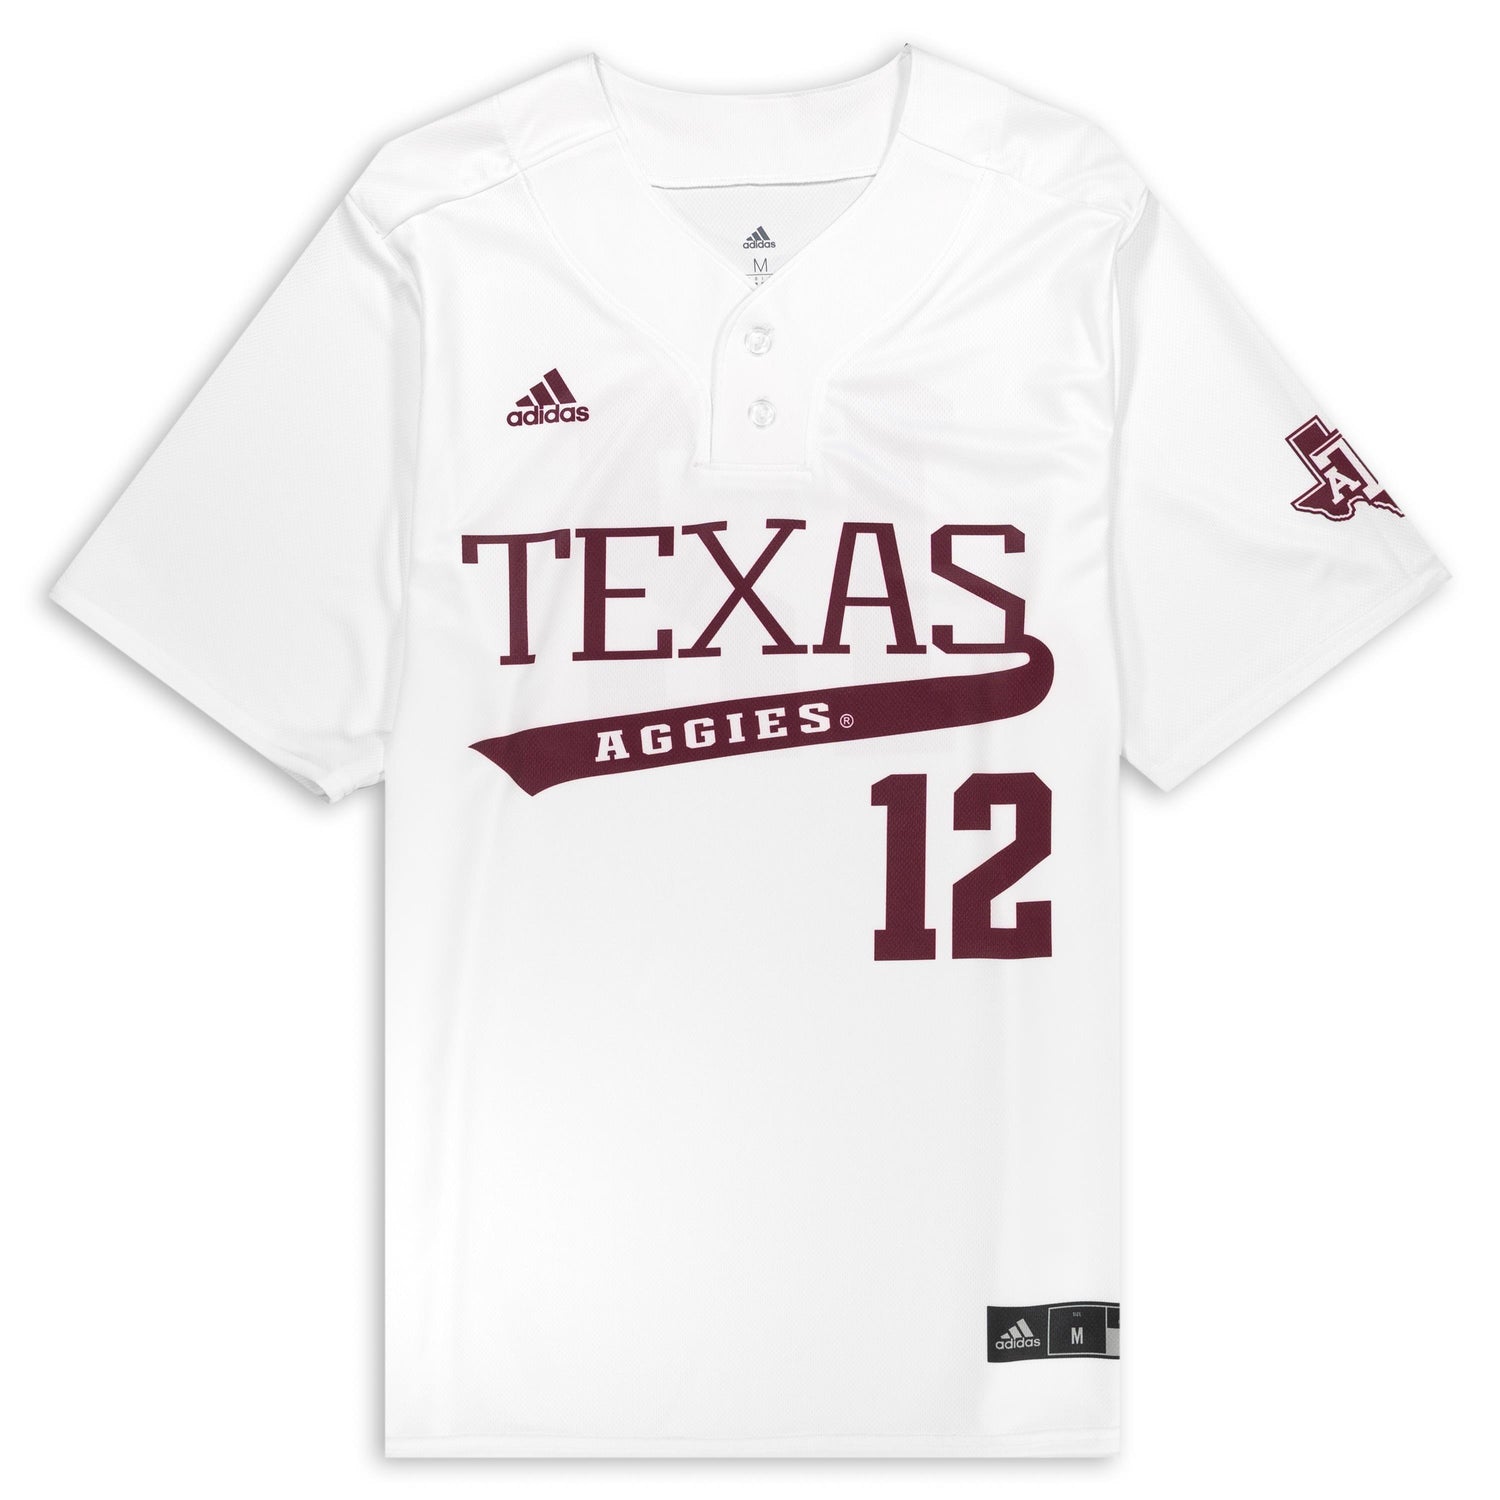 Texas A&M Aggies adidas Replica Baseball Jersey - Maroon